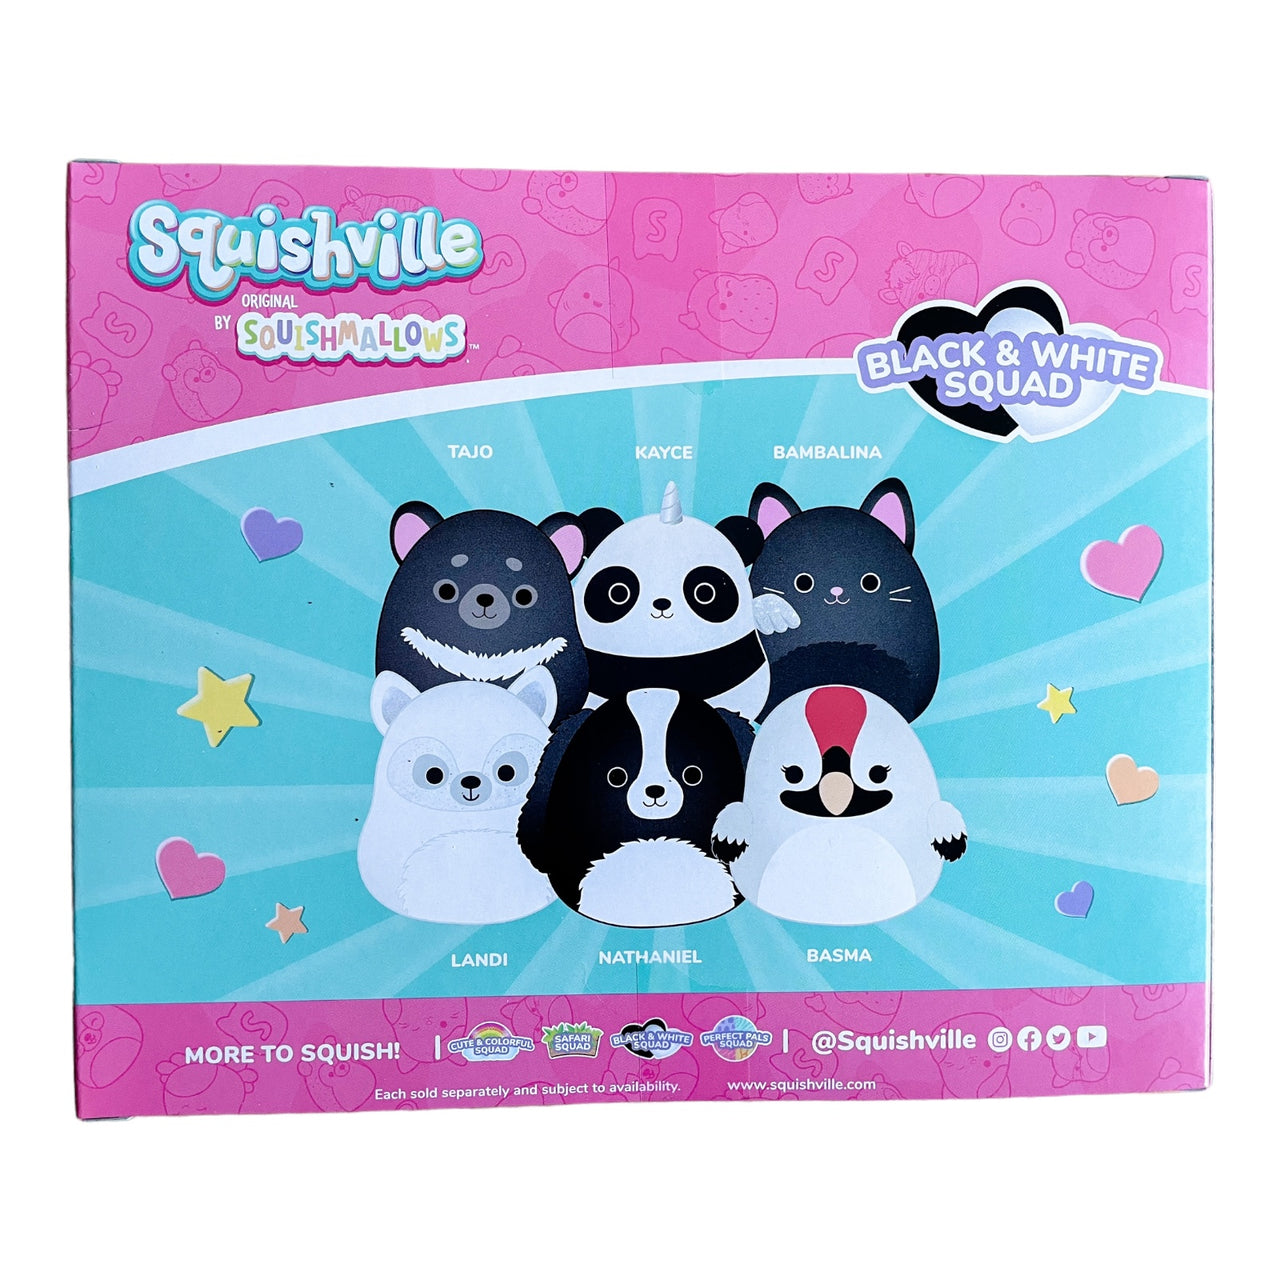 Squishville 2" Black & White Squad 6 Pack Squishmallows